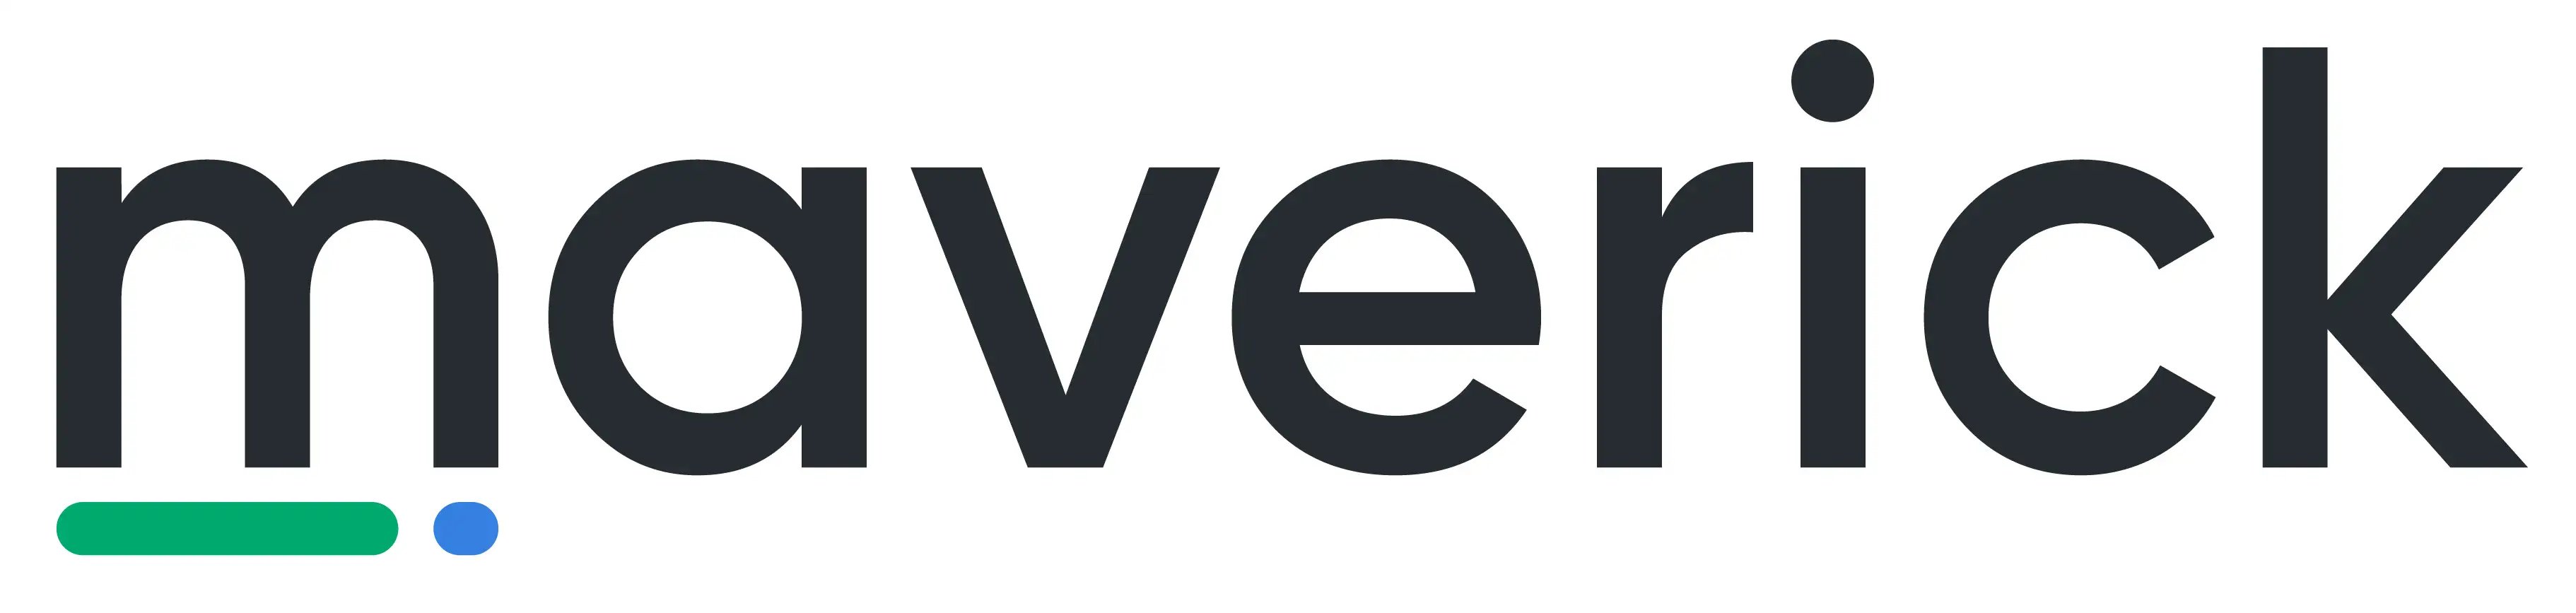 Maverick Payments logo